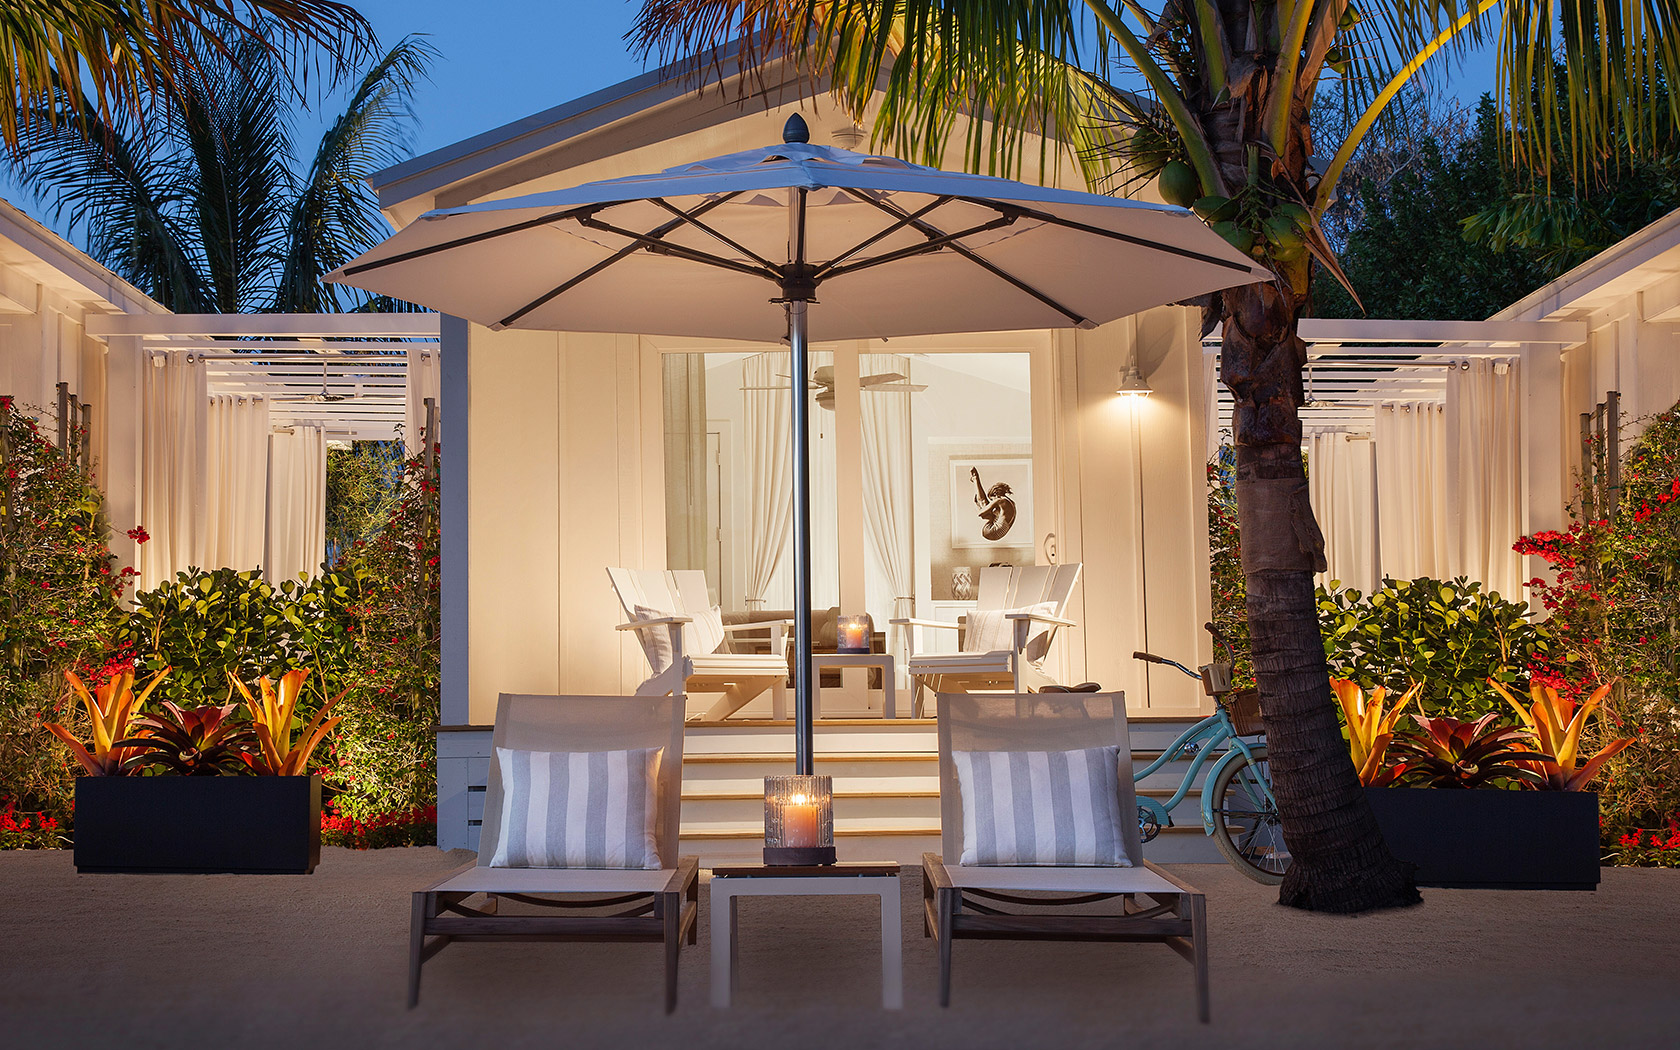 Florida Keys Makes Luxury Push With New Hotel Openings